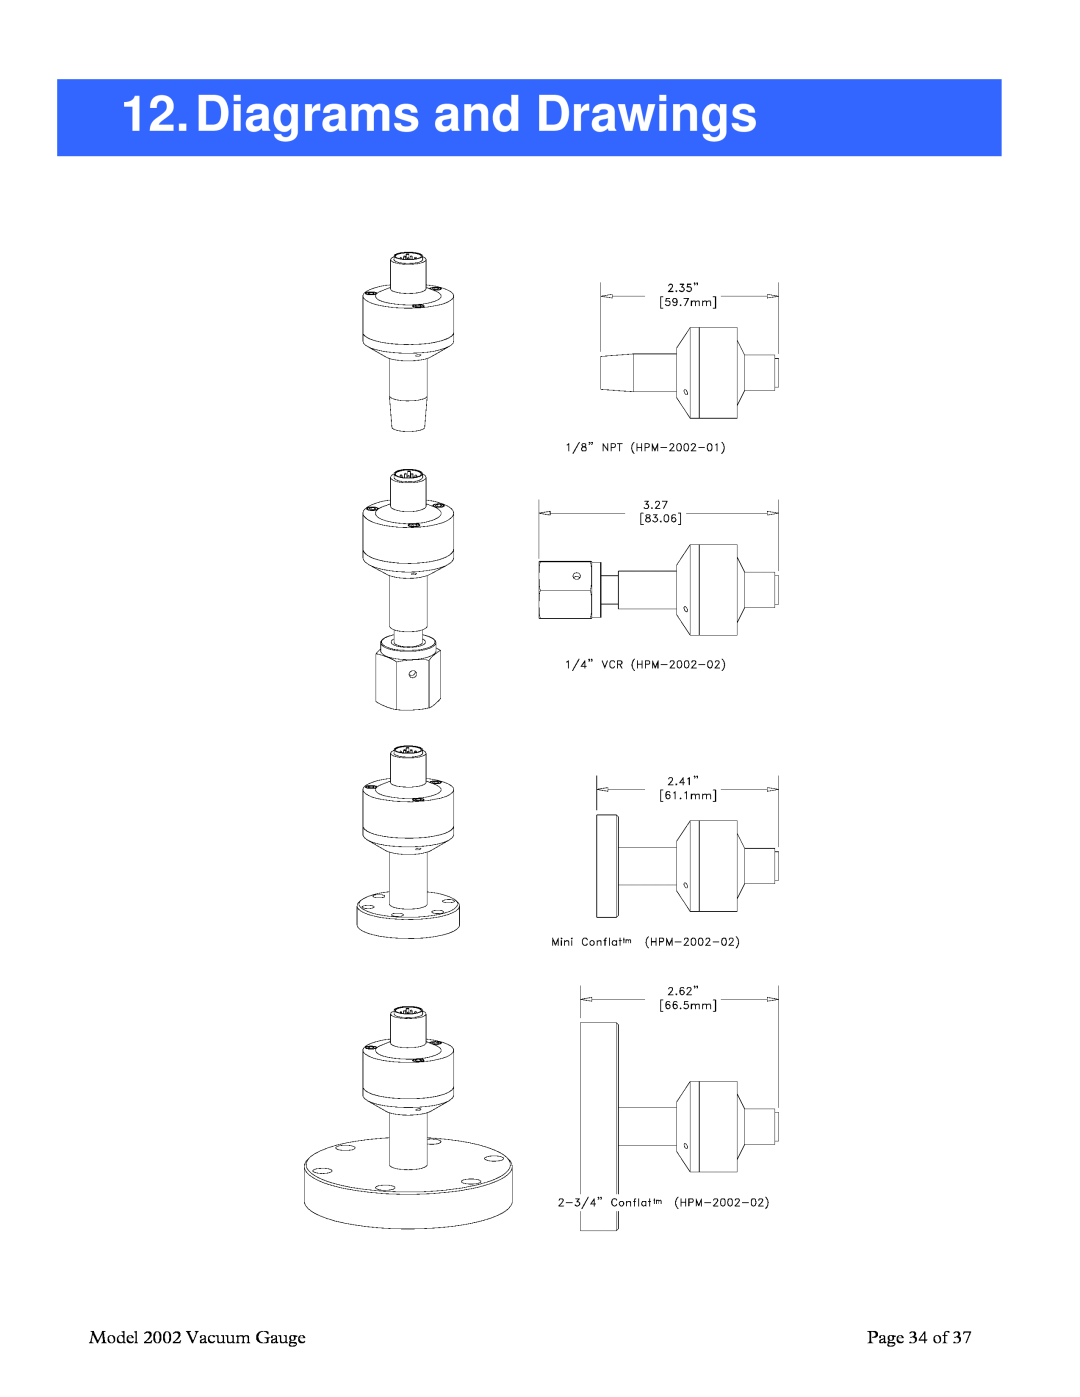 Teledyne instruction manual Diagrams and Drawings, Model 2002 Vacuum Gauge, Page 34 of 